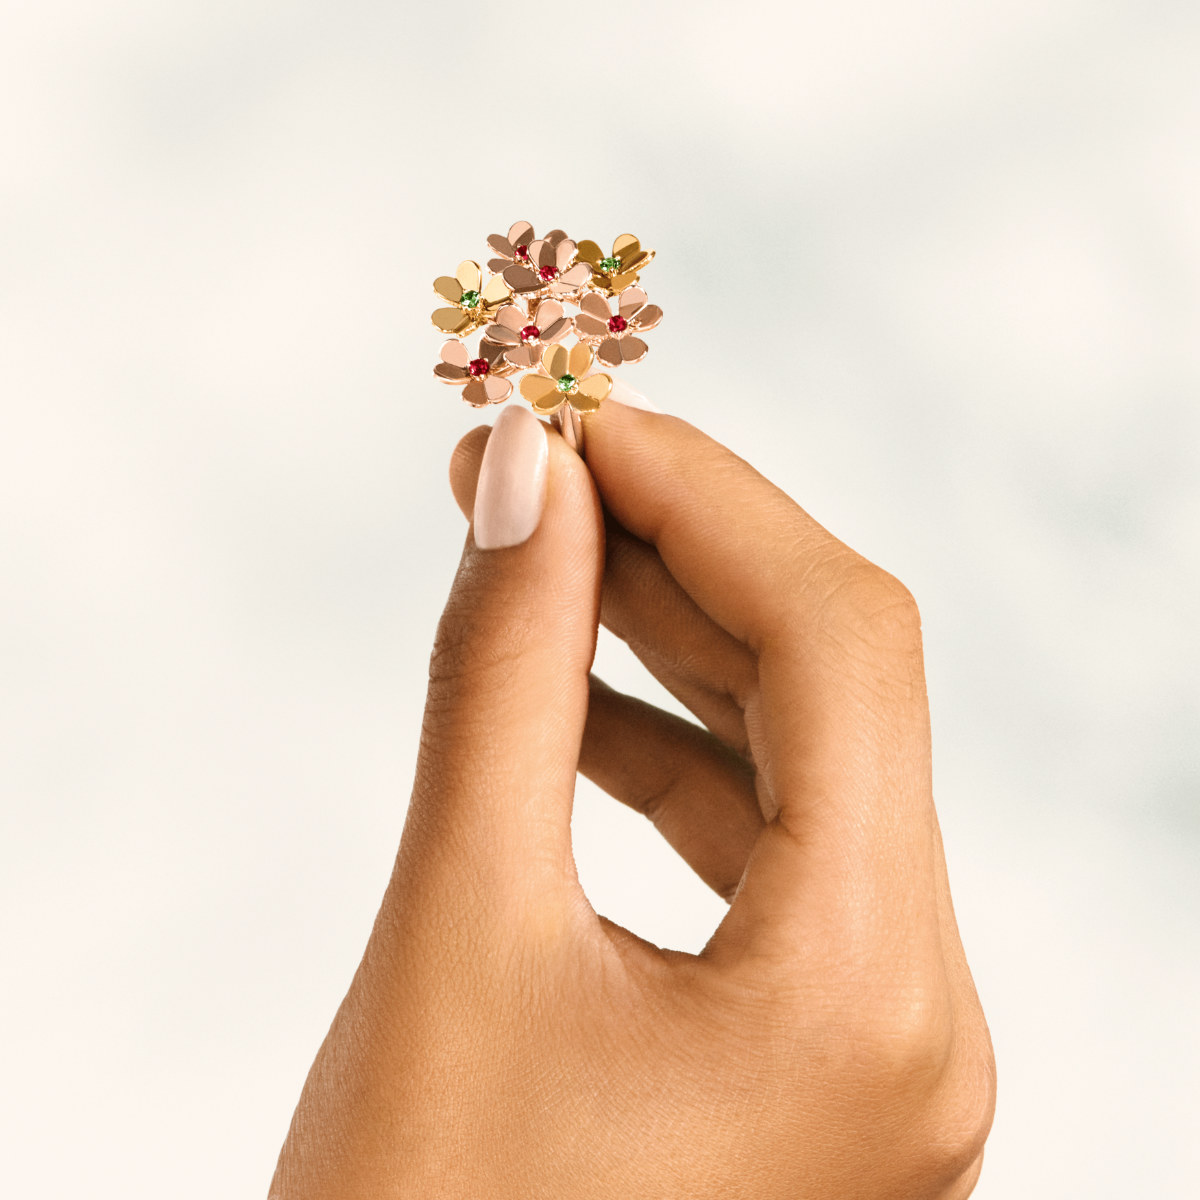 Van Cleef & Arpels Presents Its New Frivole Creations: Shimmering Blossoms